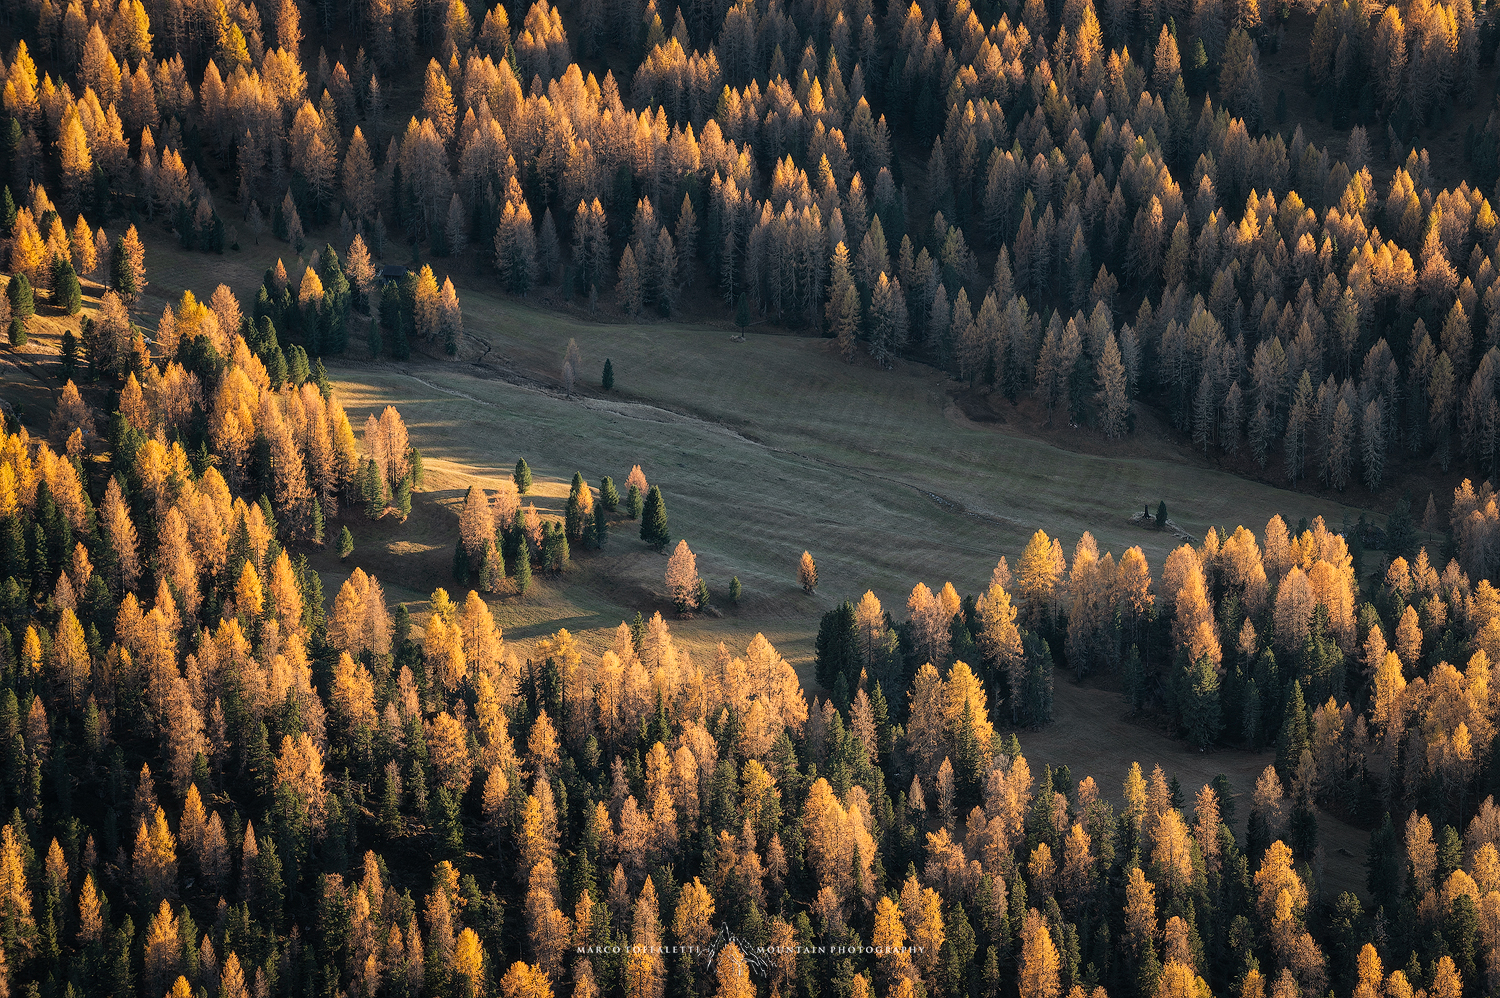 Autumn in the Dolomites...